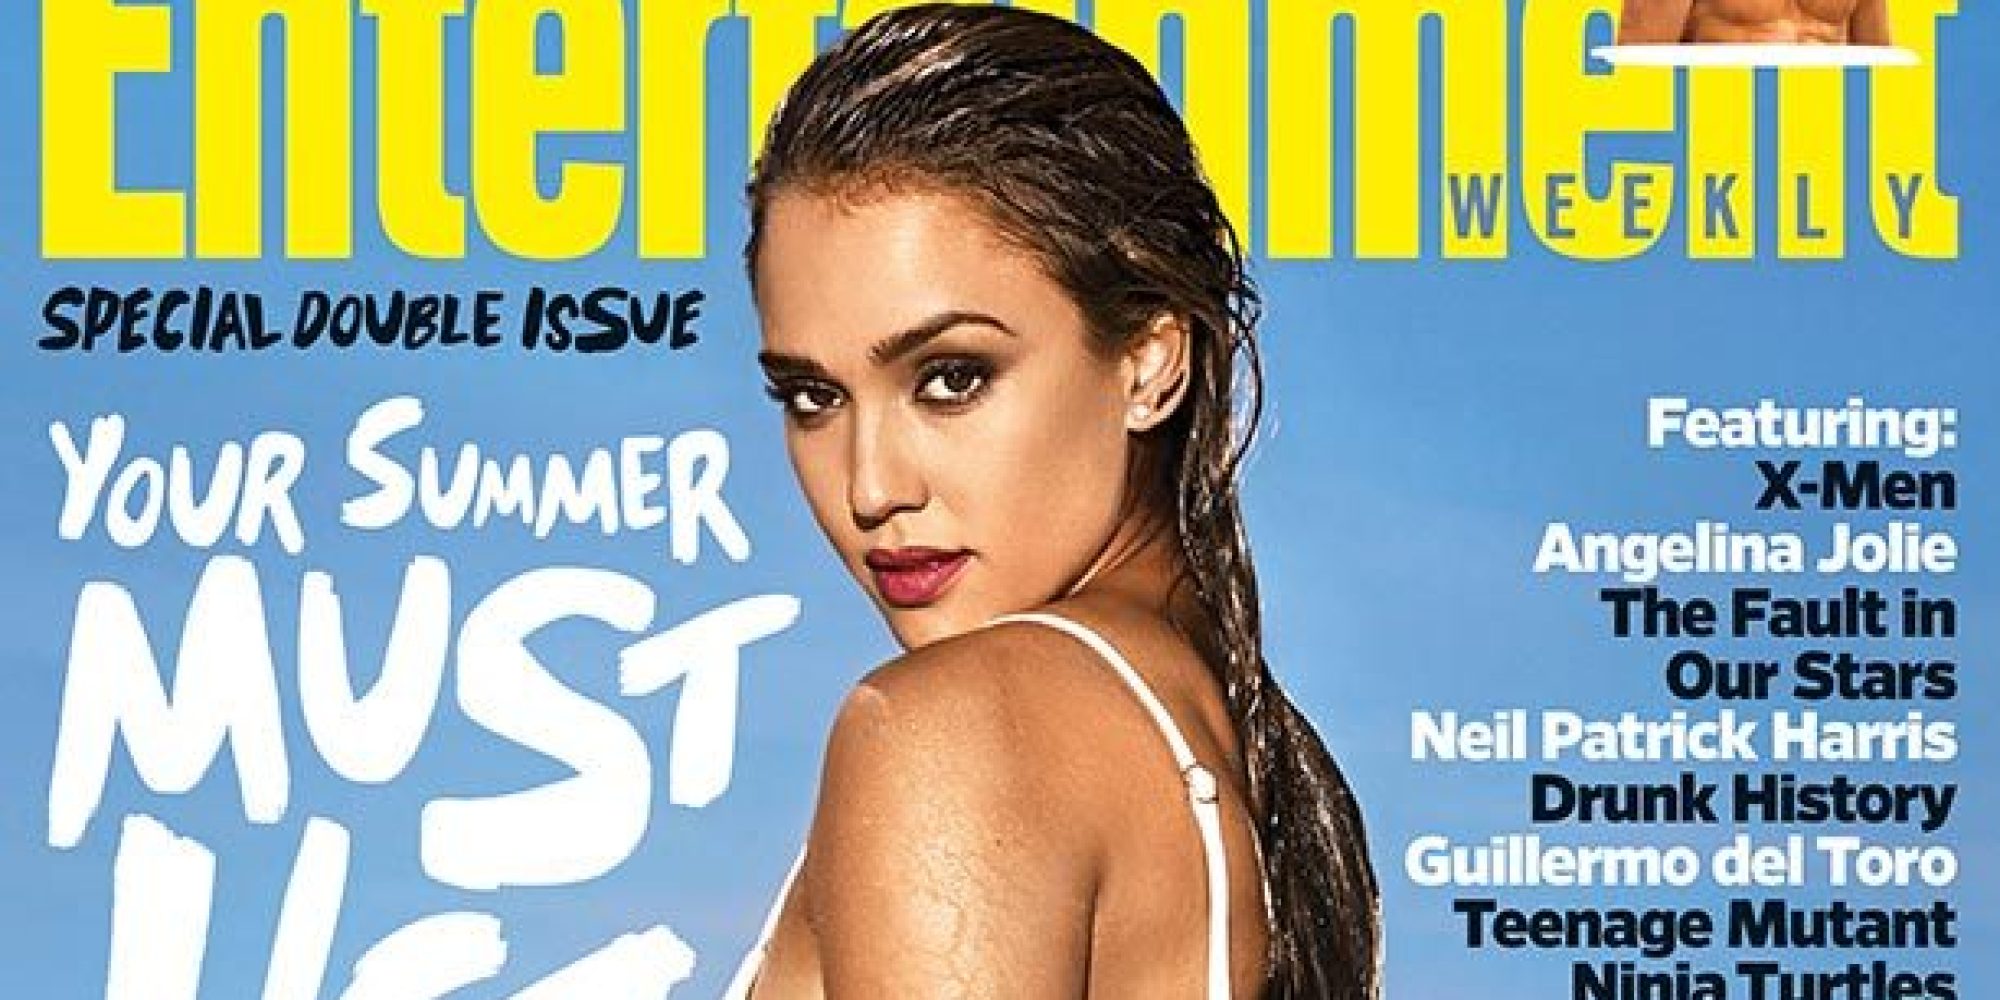 Jessica Alba Sizzles In Tiny White Bikini On Entertainment Weekly Cover 9328